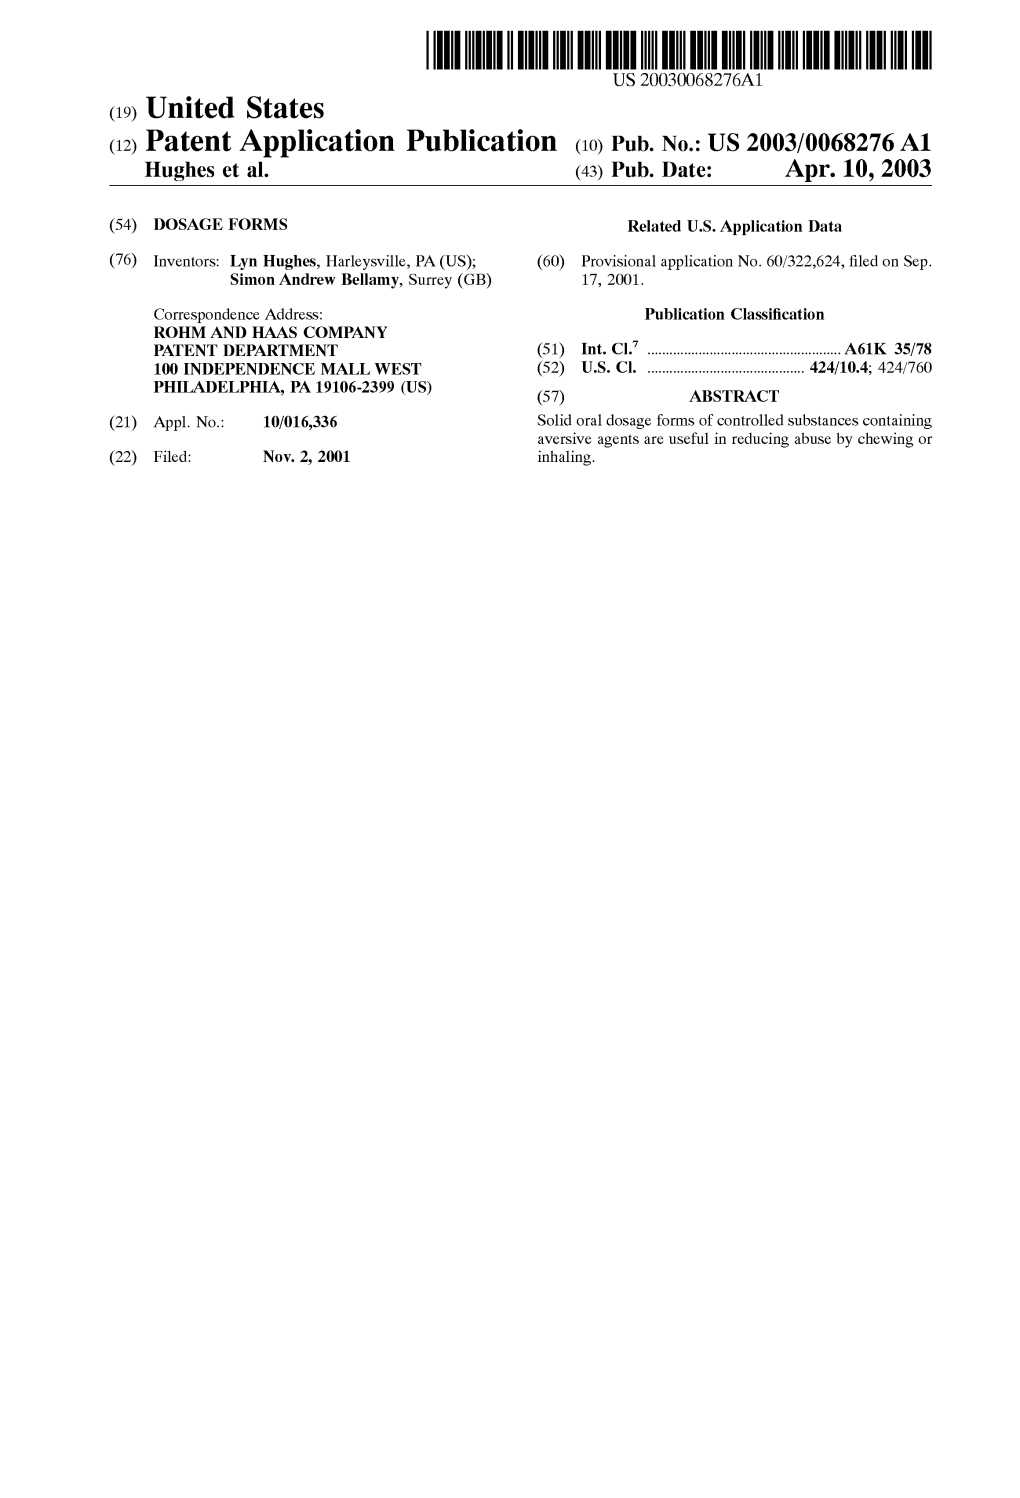 (12) Patent Application Publication (10) Pub. No.: US 2003/0068276 A1 Hughes Et Al